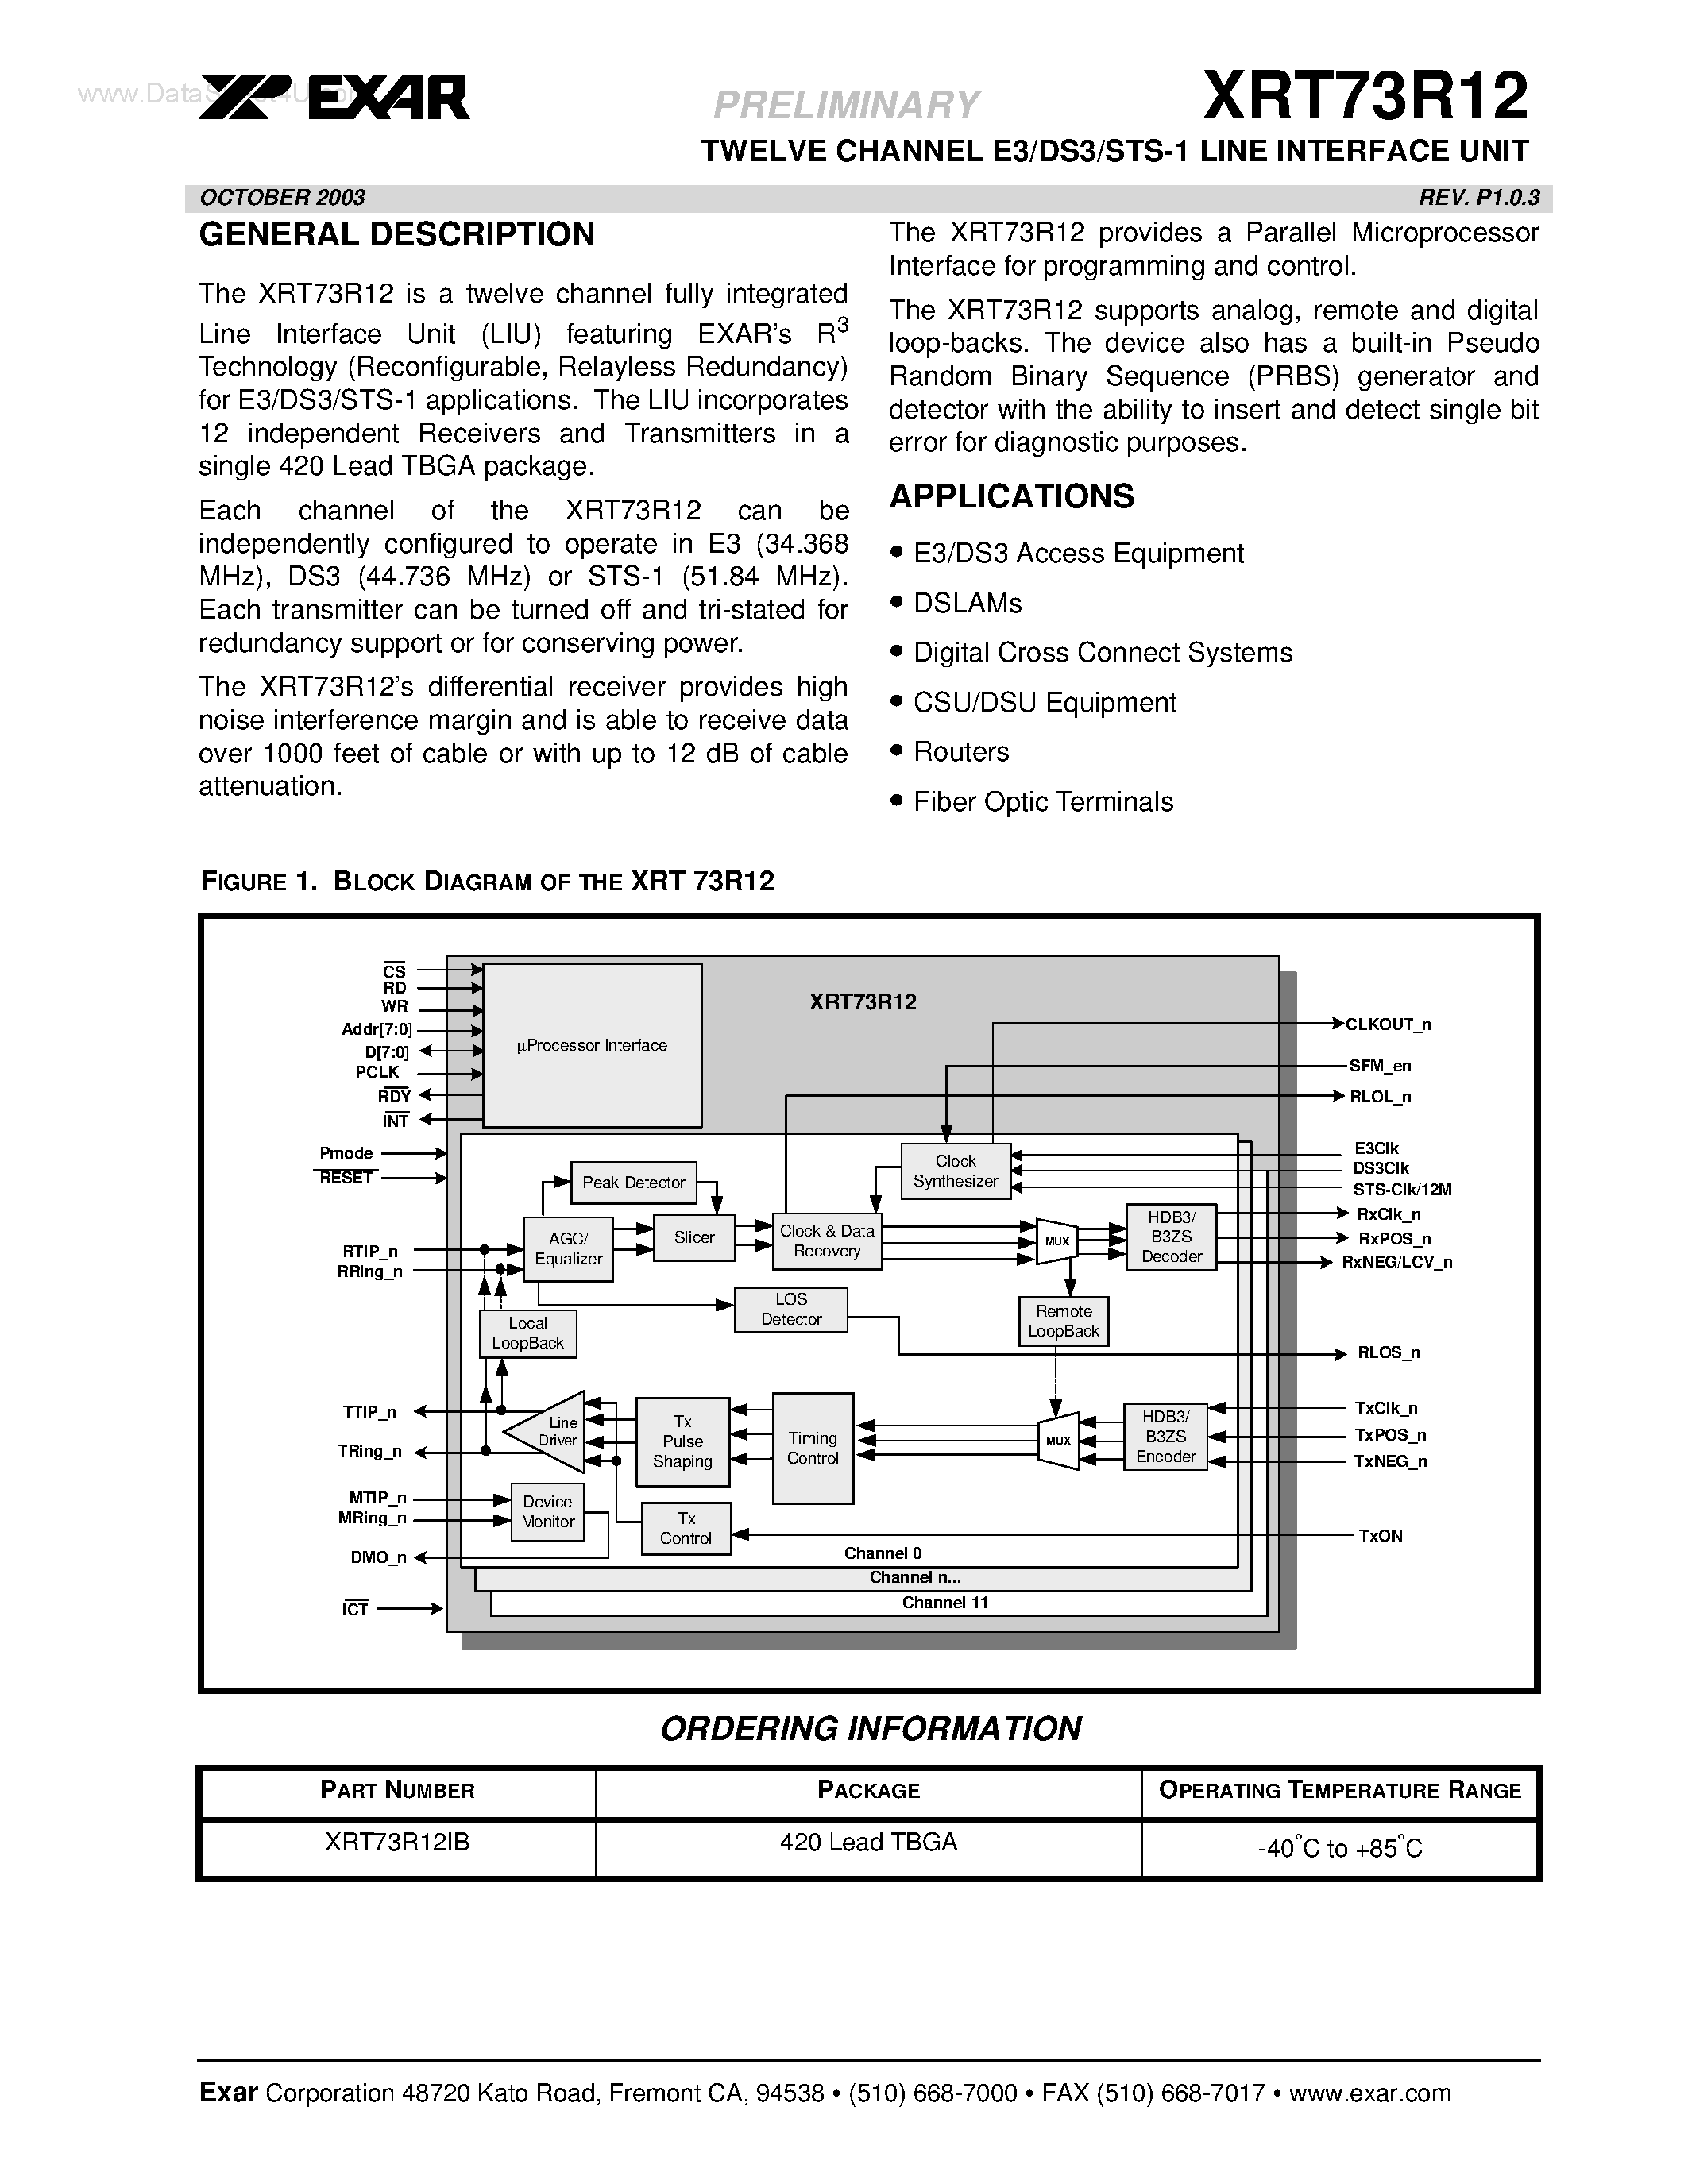 Datasheet XRT73R12 - TWELVE CHANNEL E3/DS3/STS-1 LINE INTERFACE UNIT page 1